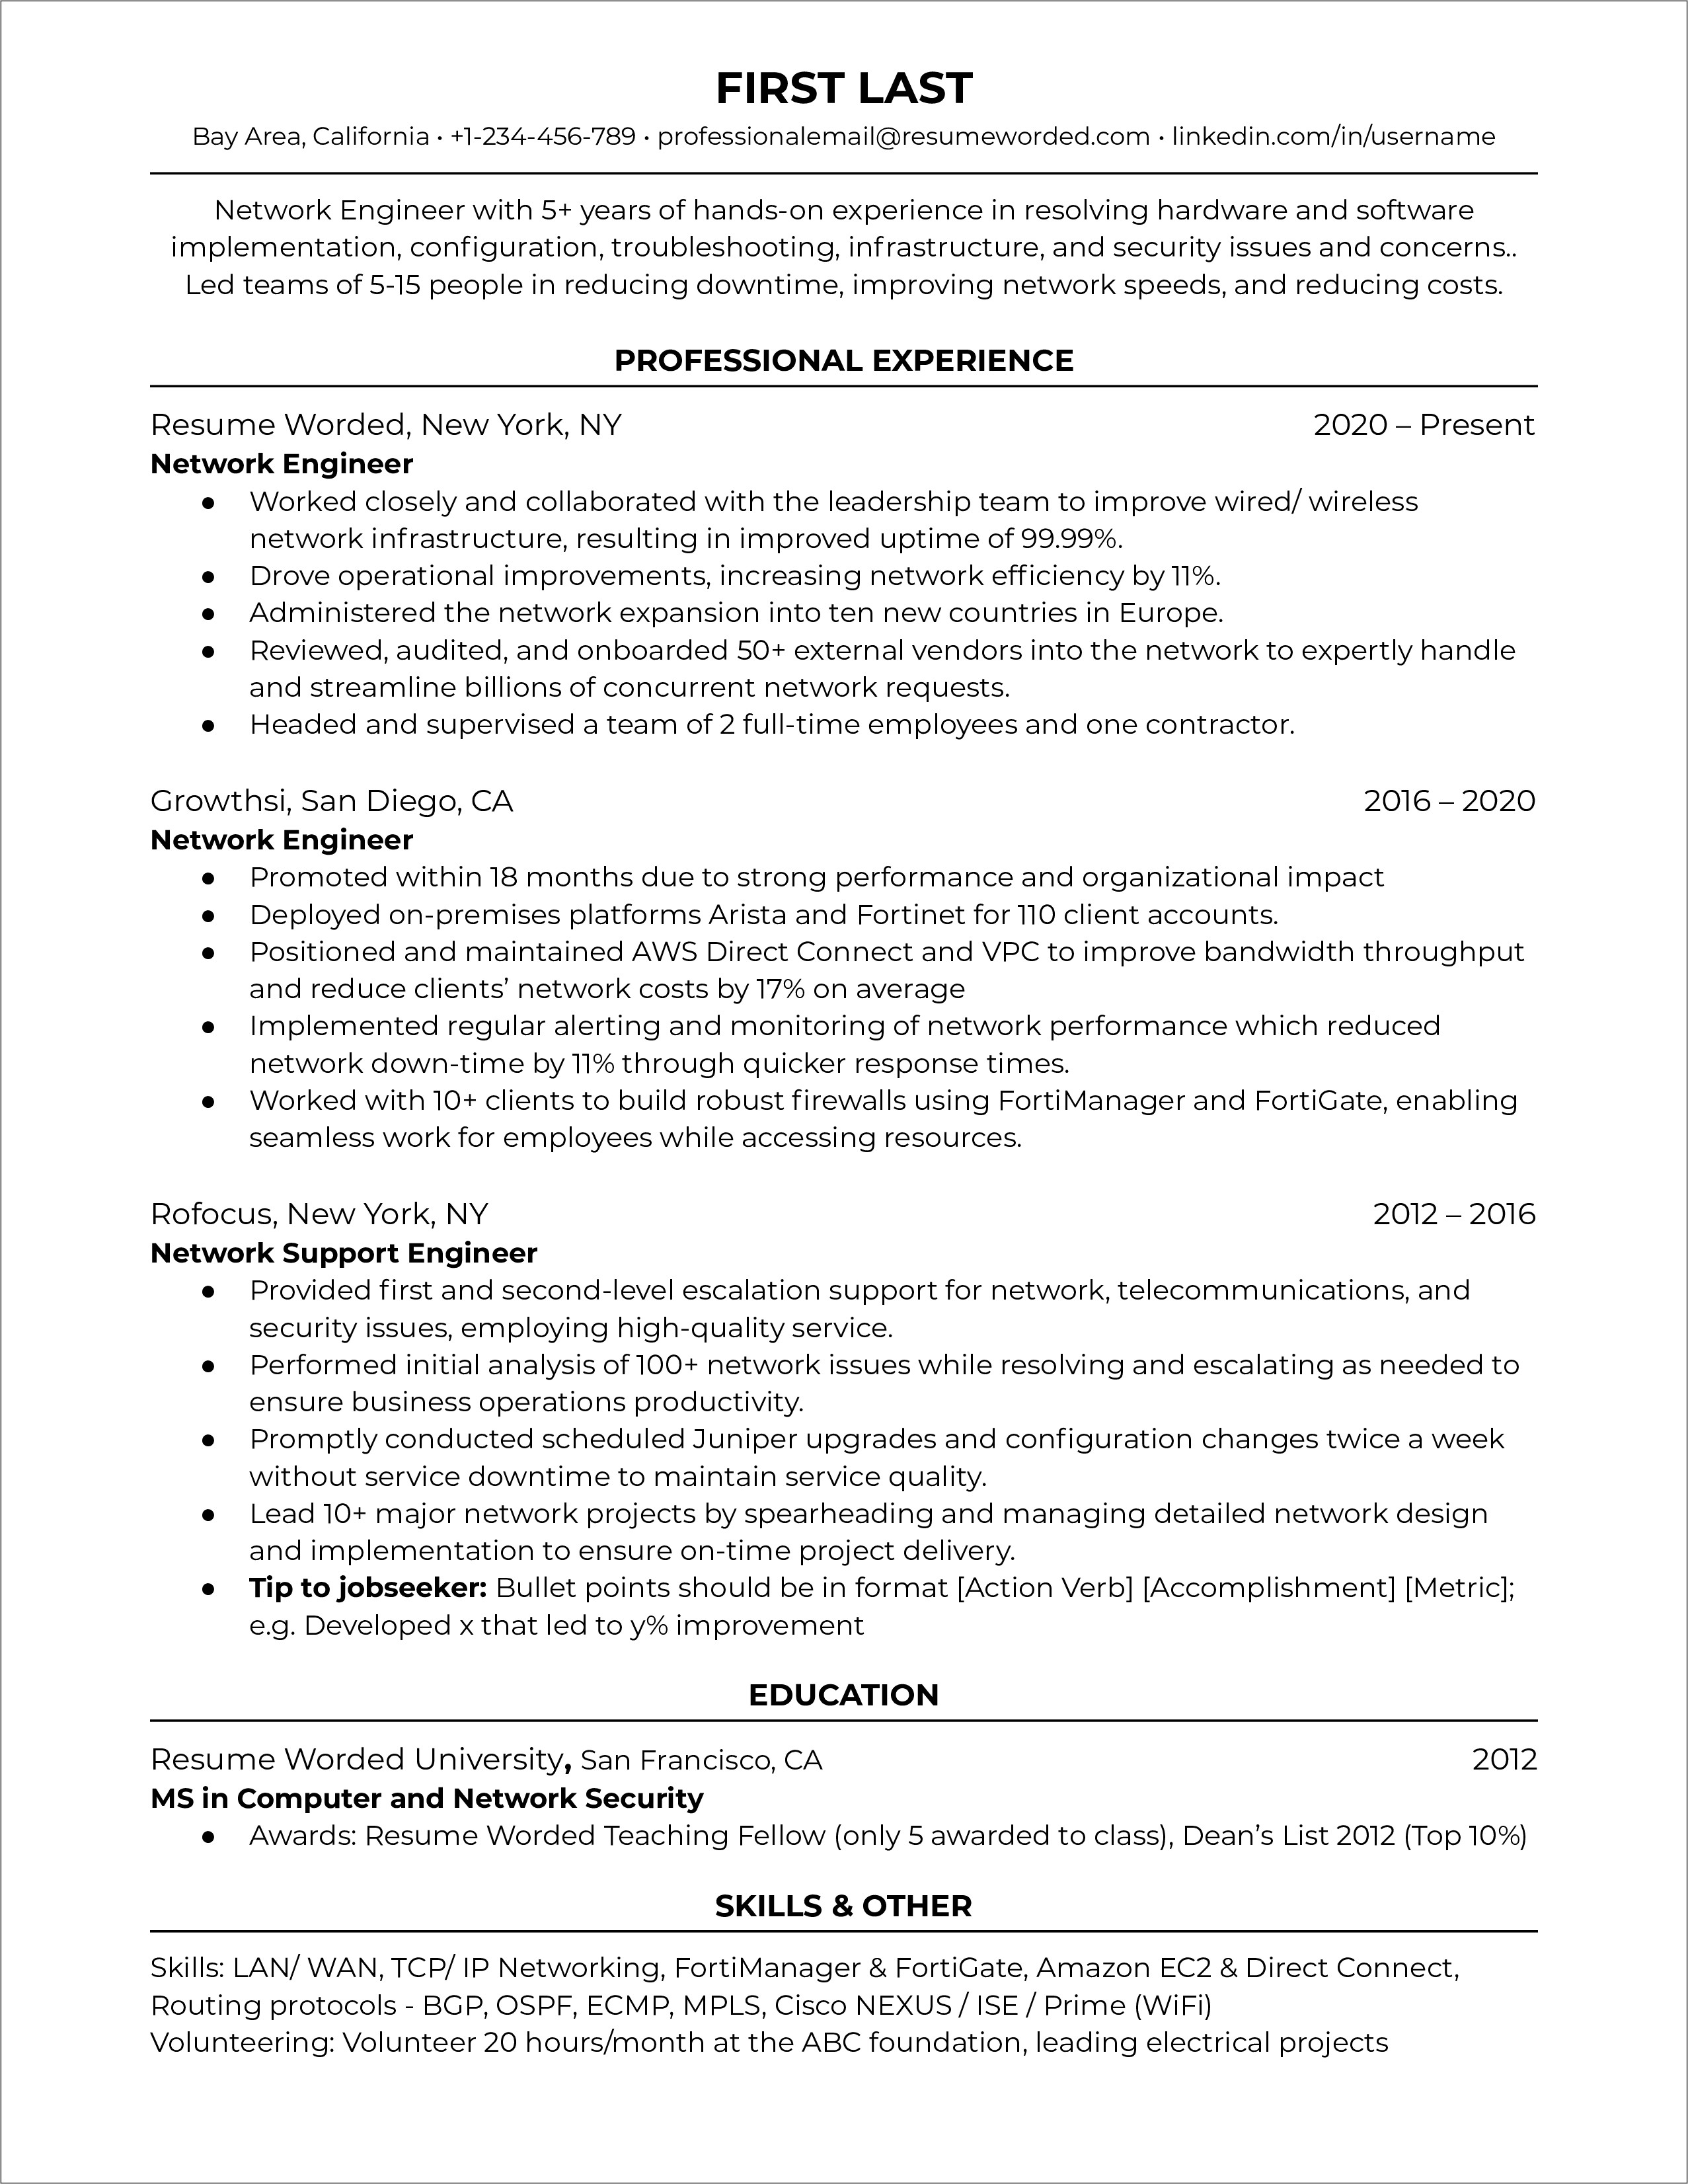 Network Engineer Job Description Resume